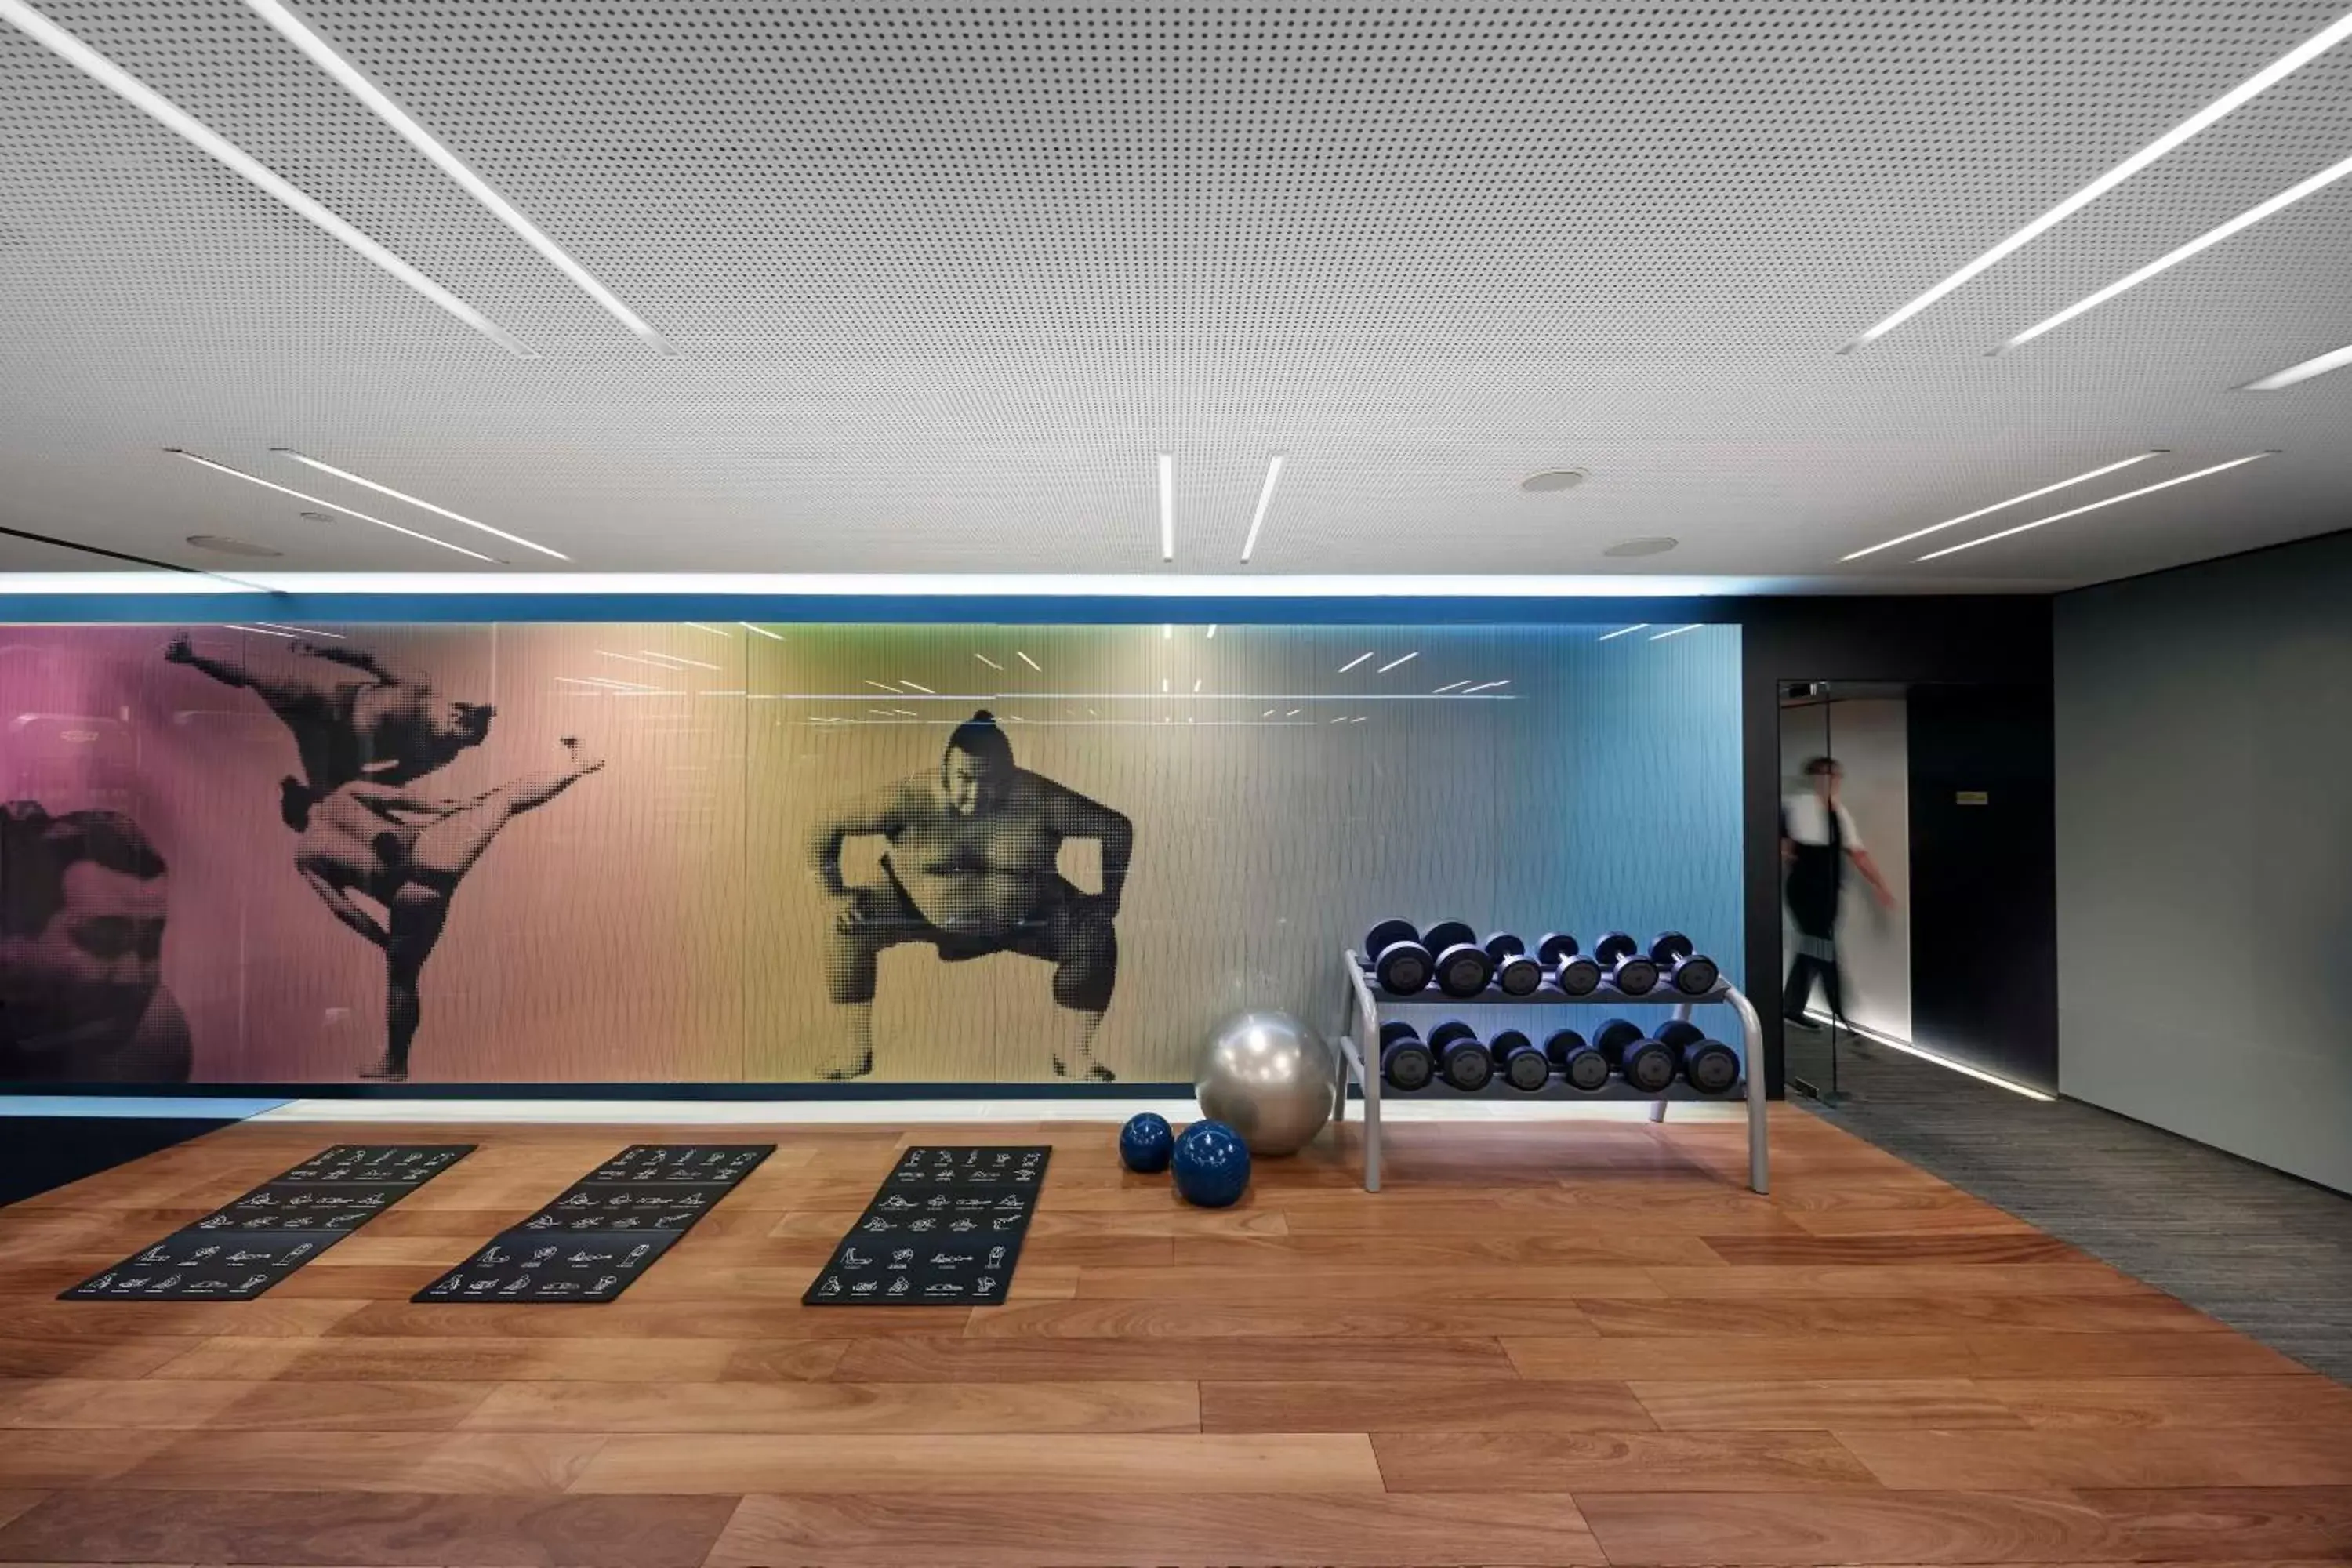 Fitness centre/facilities, Fitness Center/Facilities in Mandarin Oriental, Barcelona